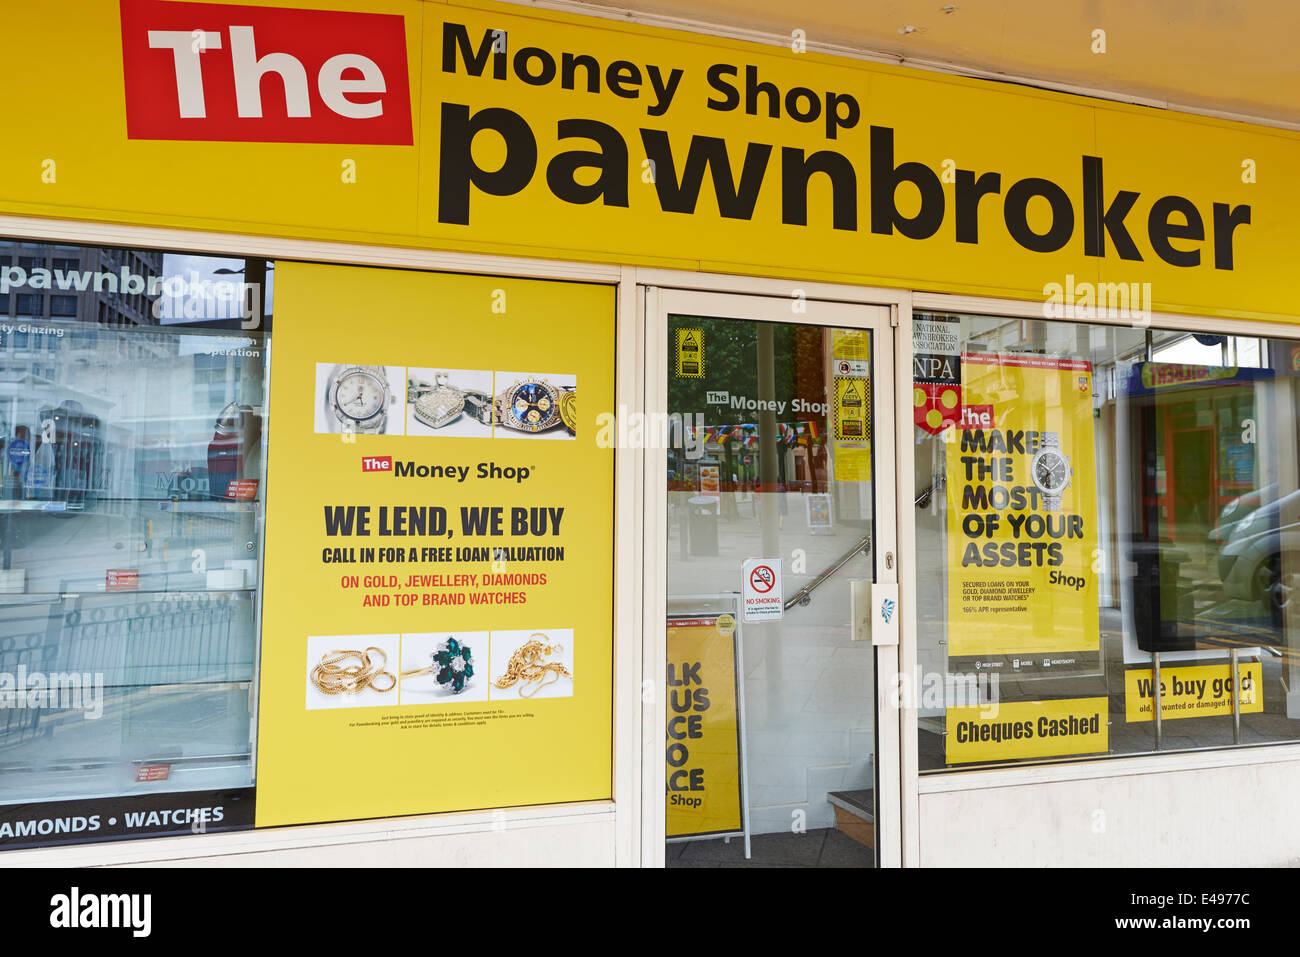 The Money Shop PawnBroker Wolverhampton West Midlands UK Stock Photo